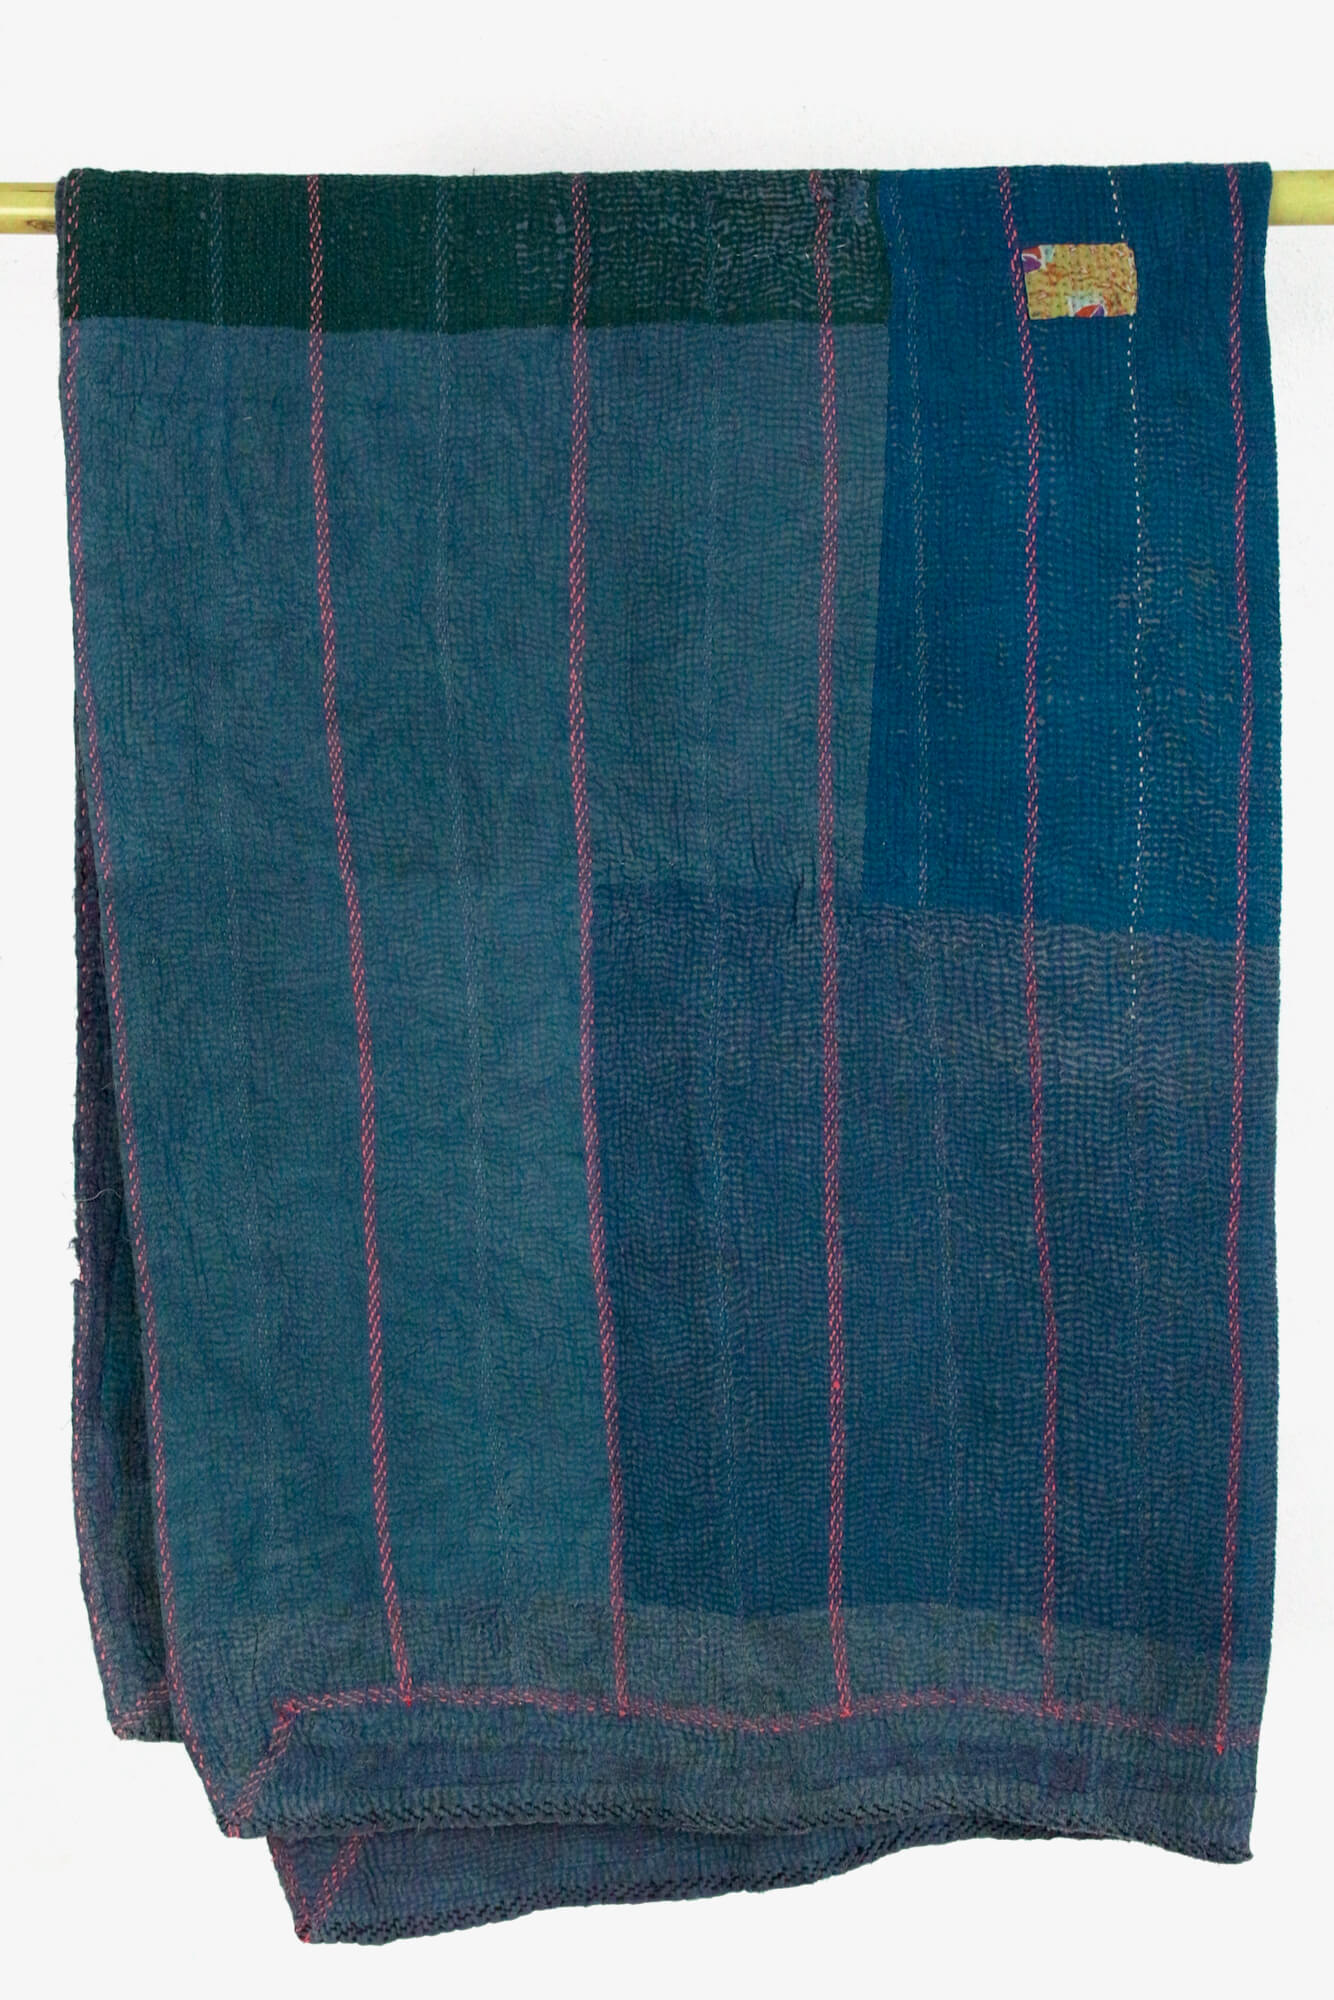 Baumwolldecke blau, Vintage